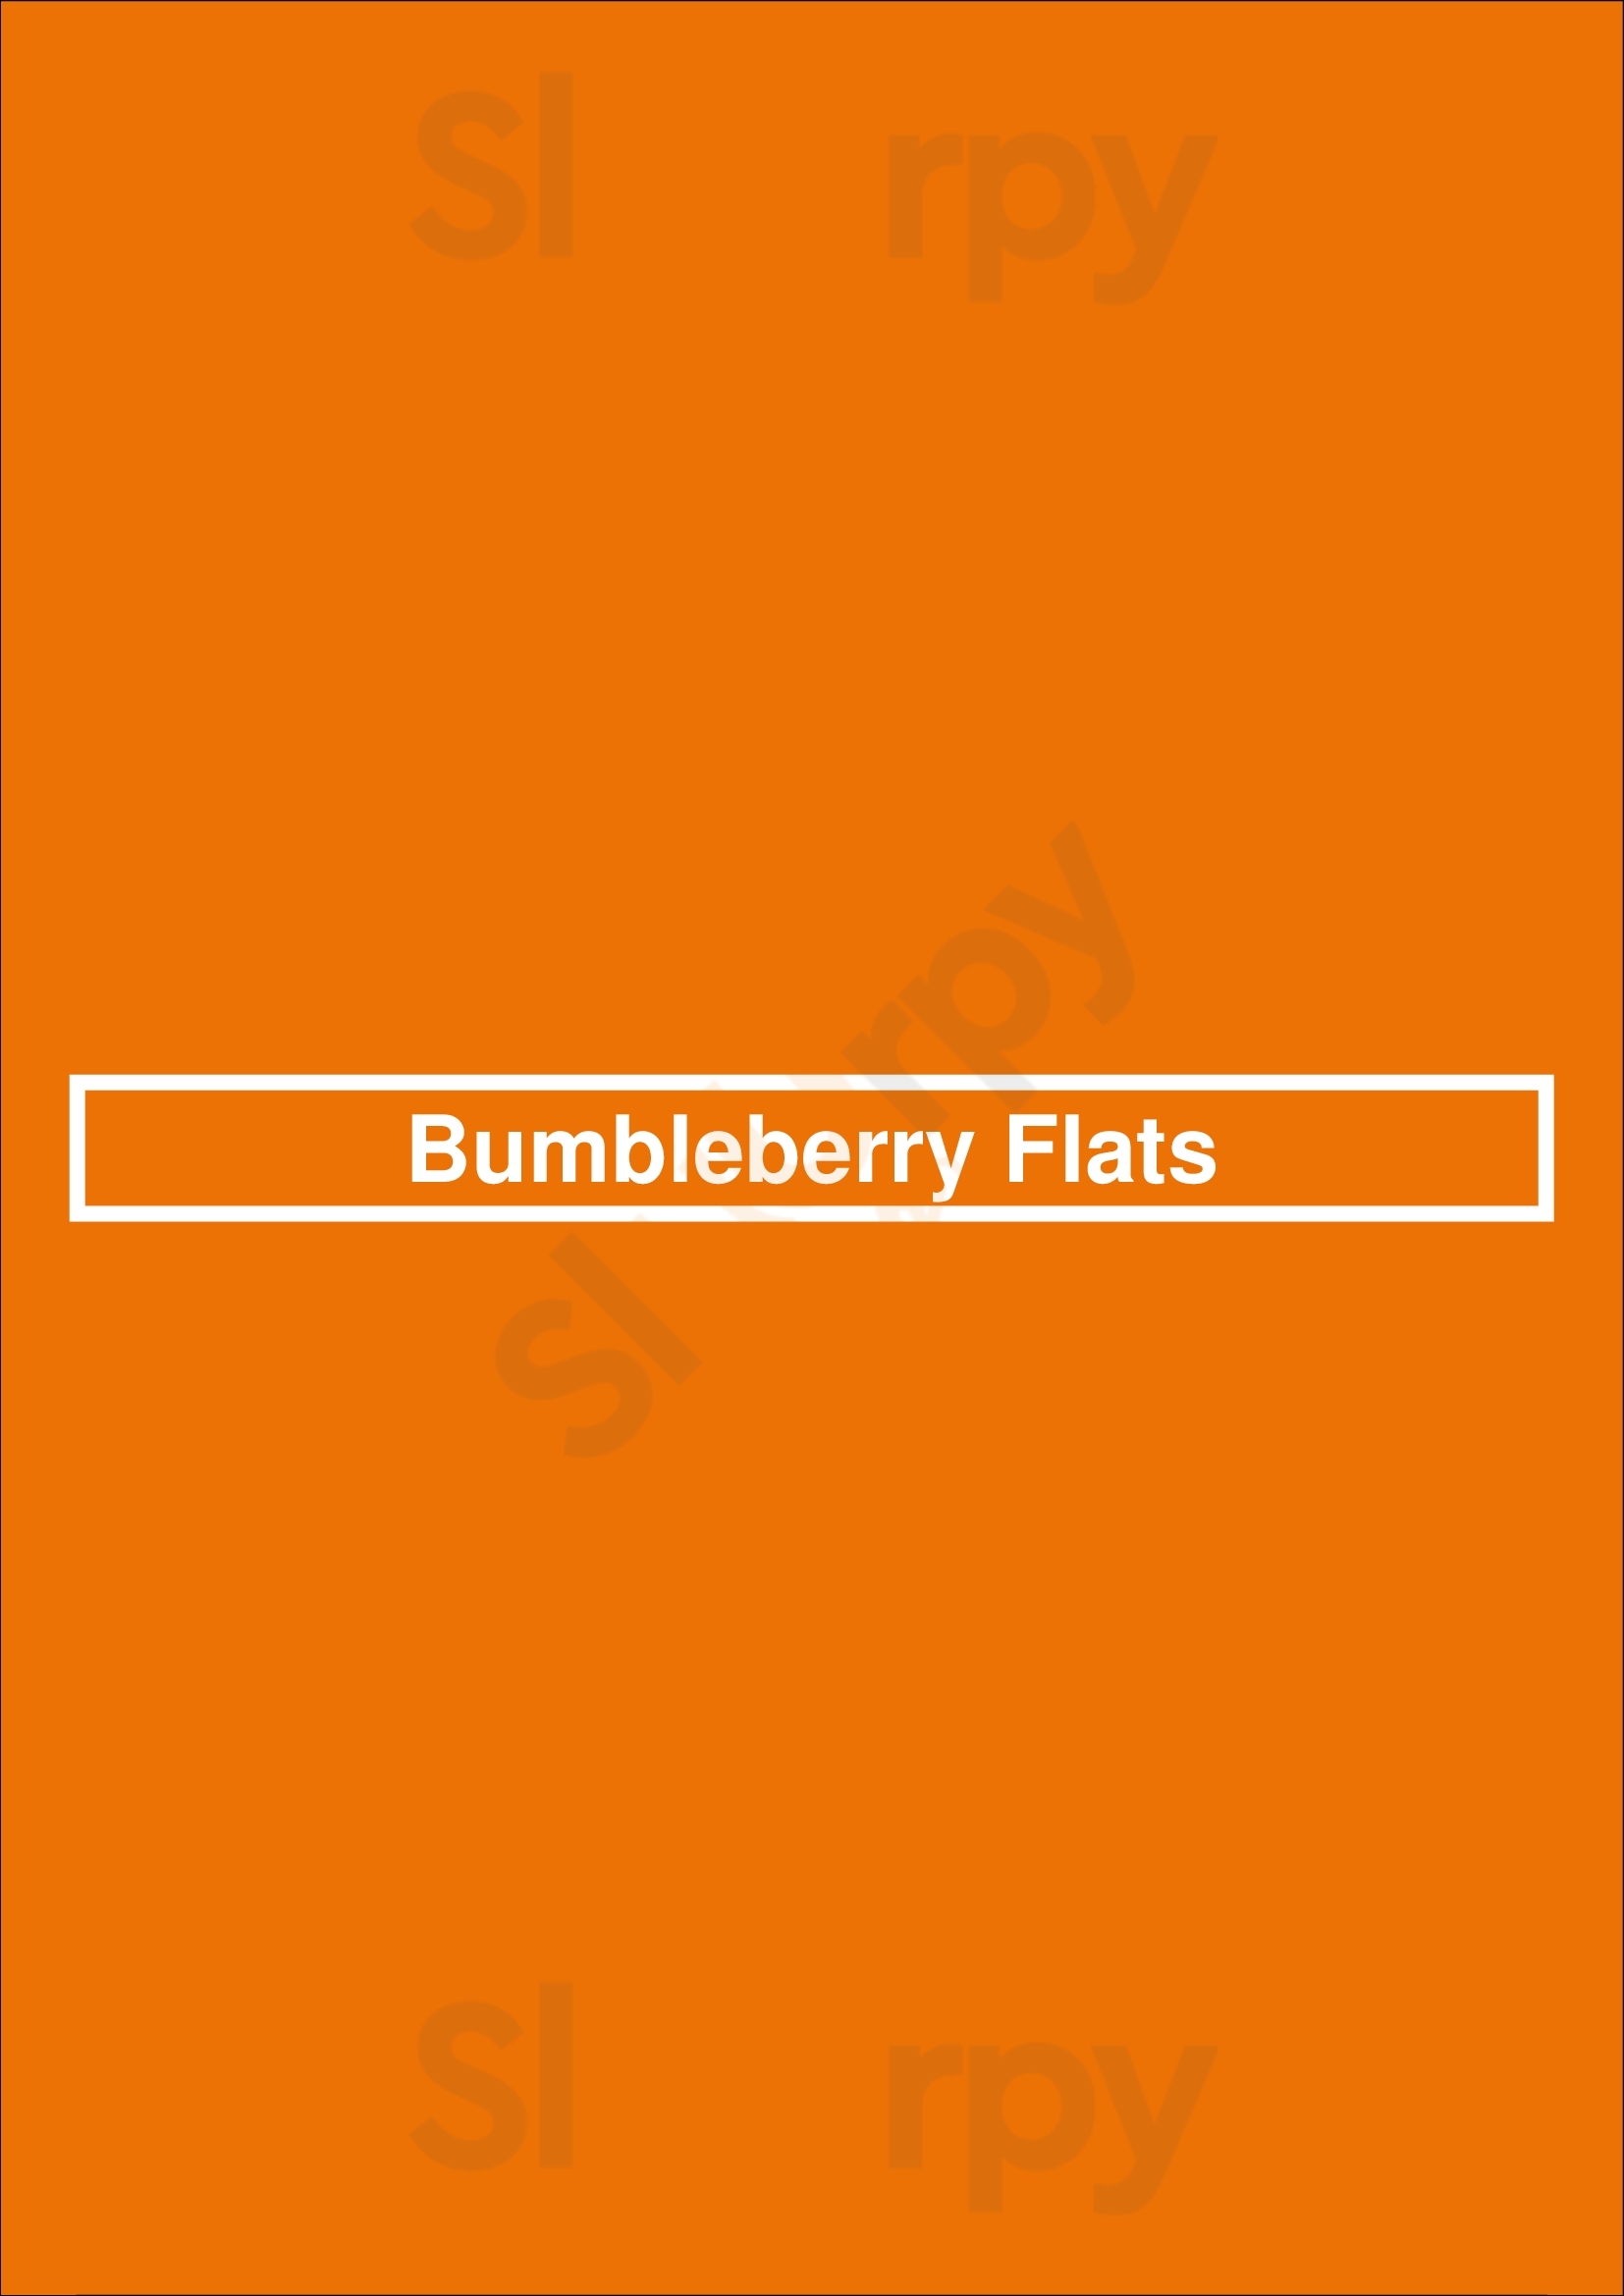 Bumbleberry Flats Laughlin Menu - 1